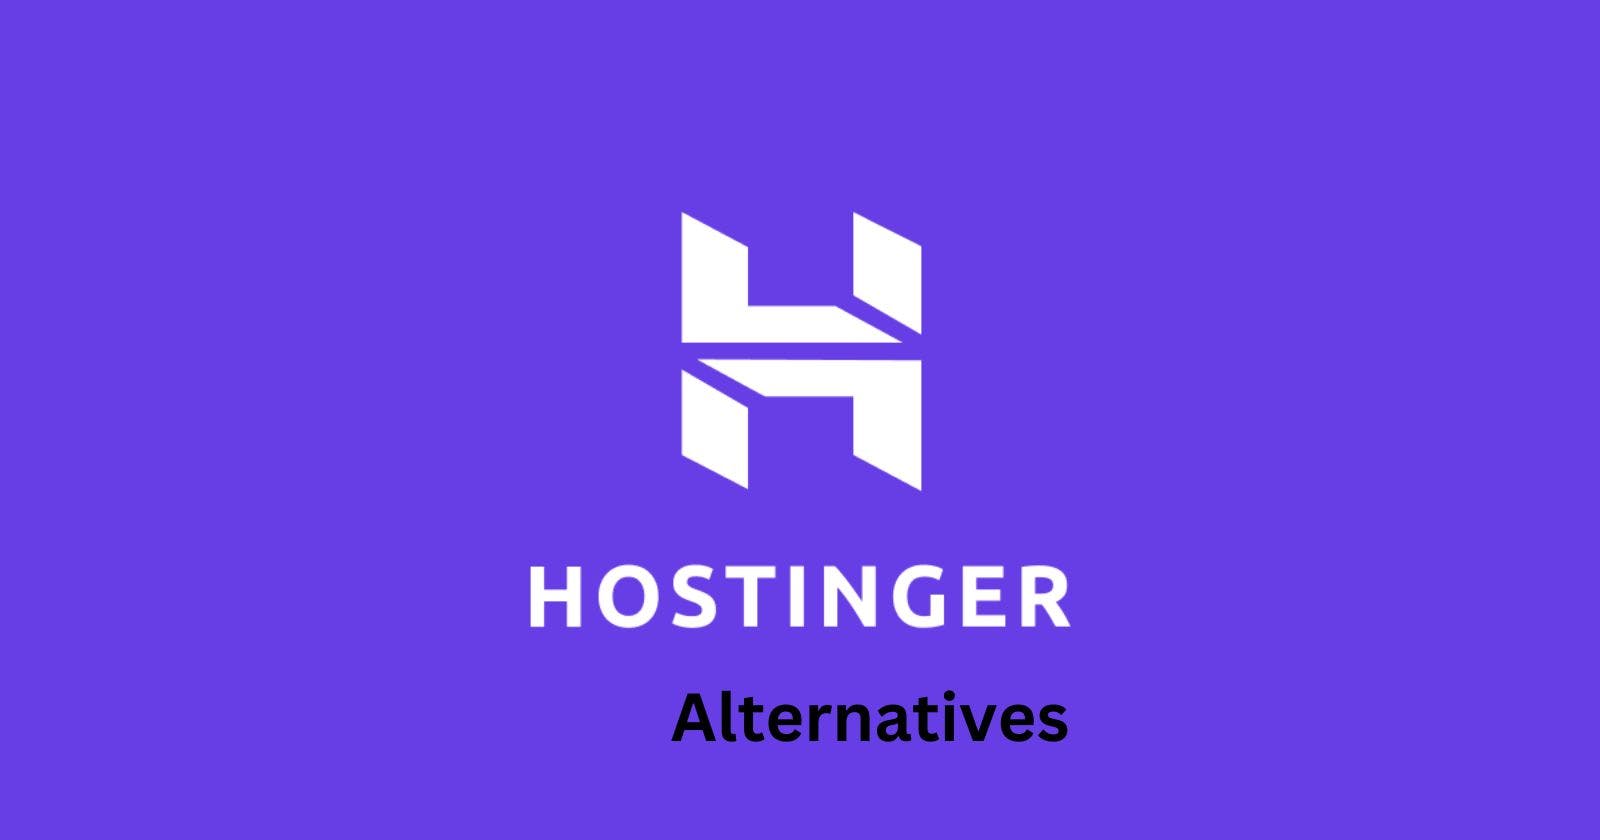 Top Hostinger Alternatives for Web Hosting